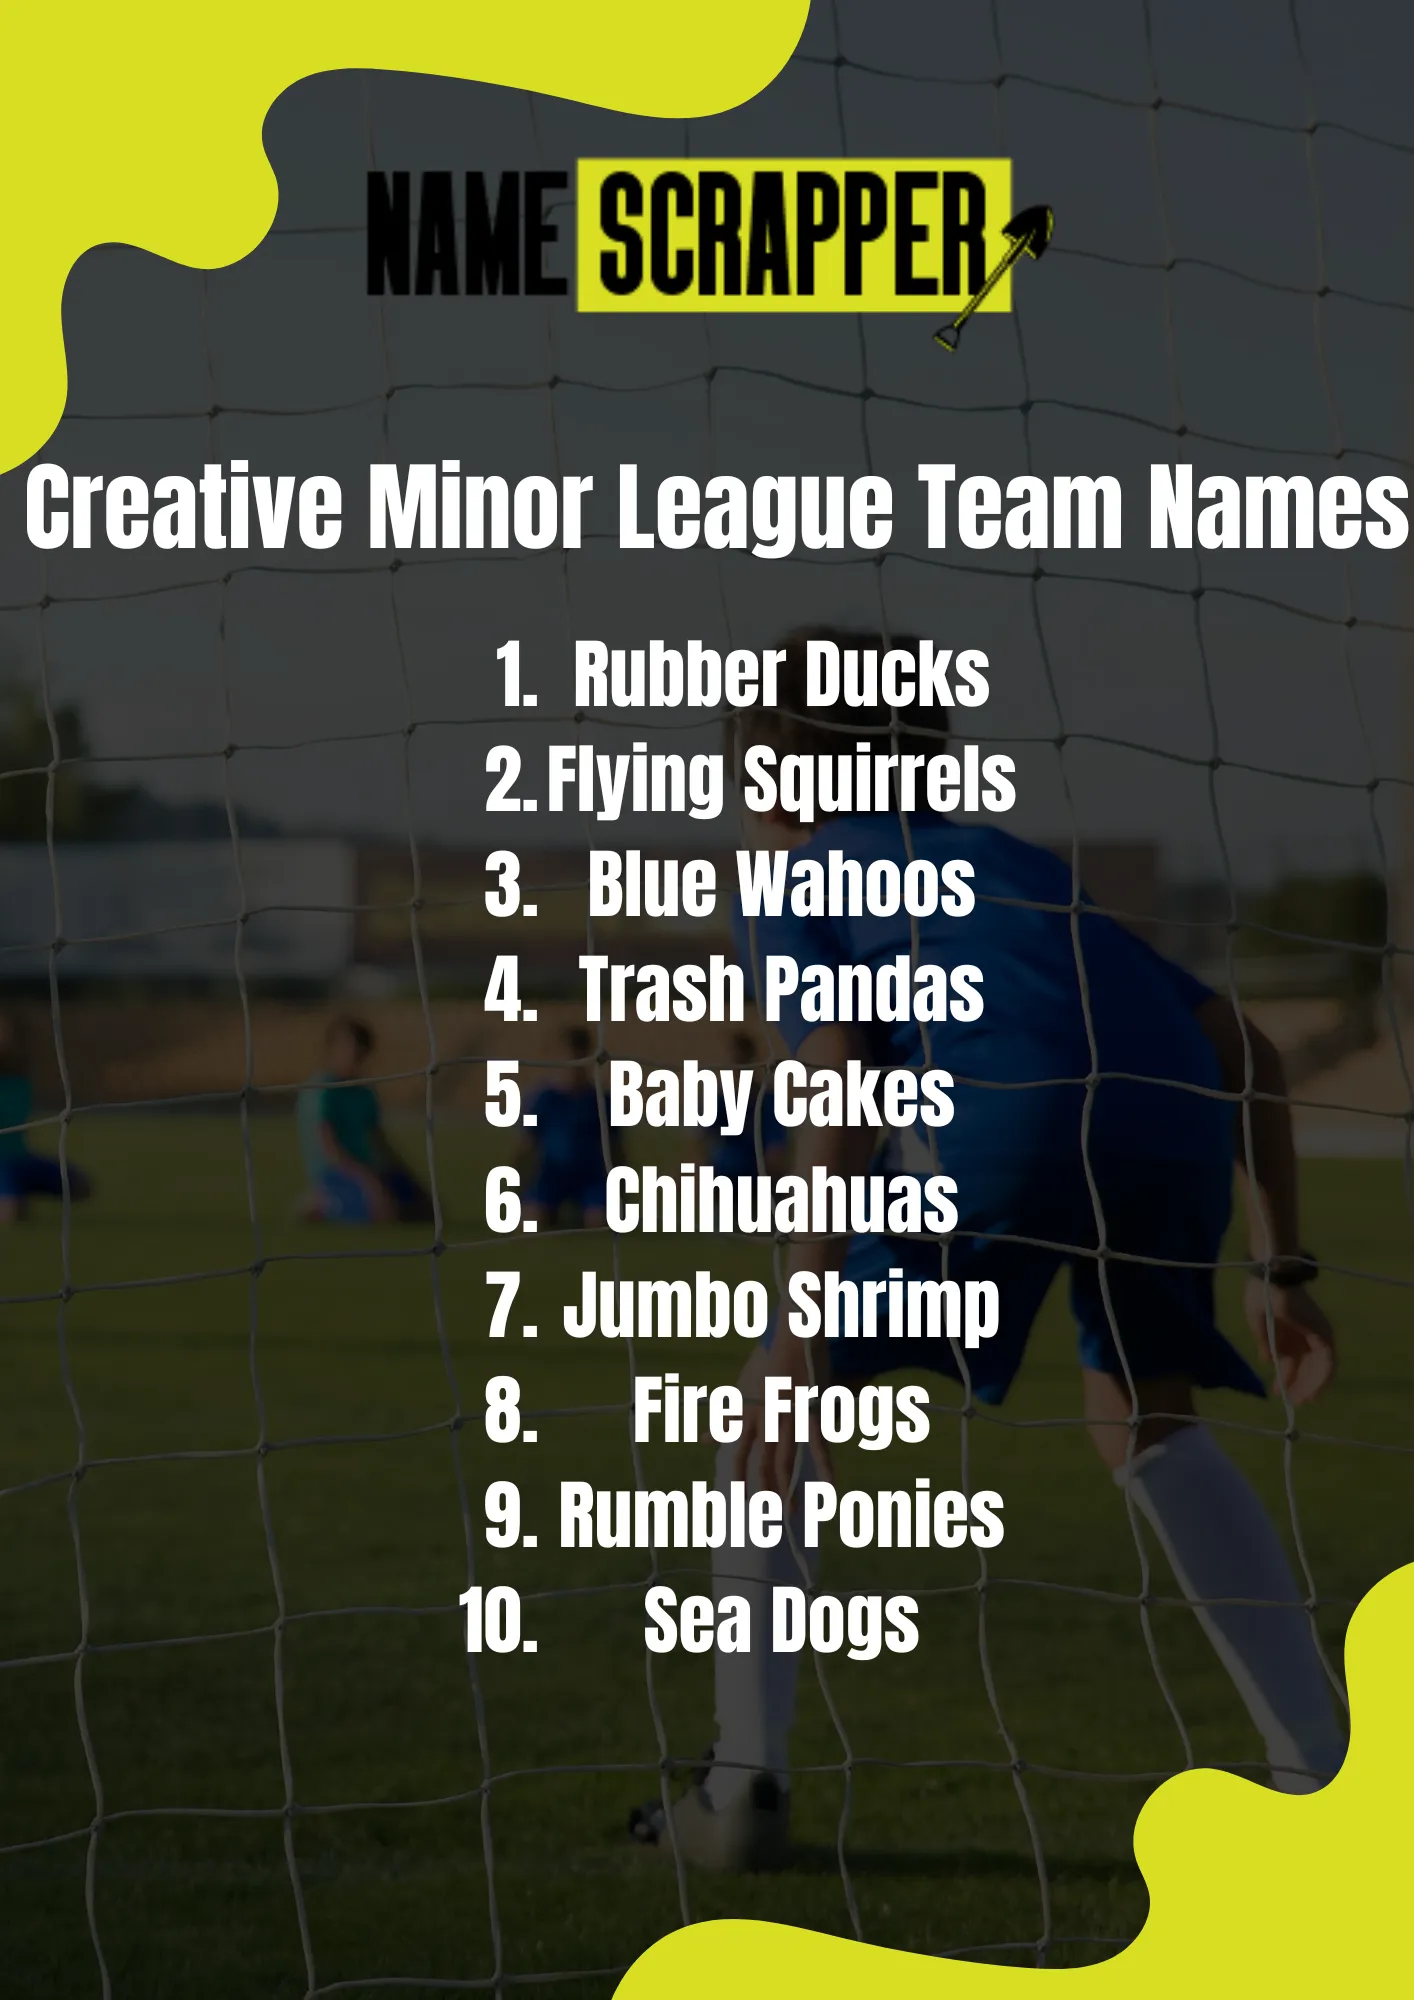 Creative Minor League Team Names